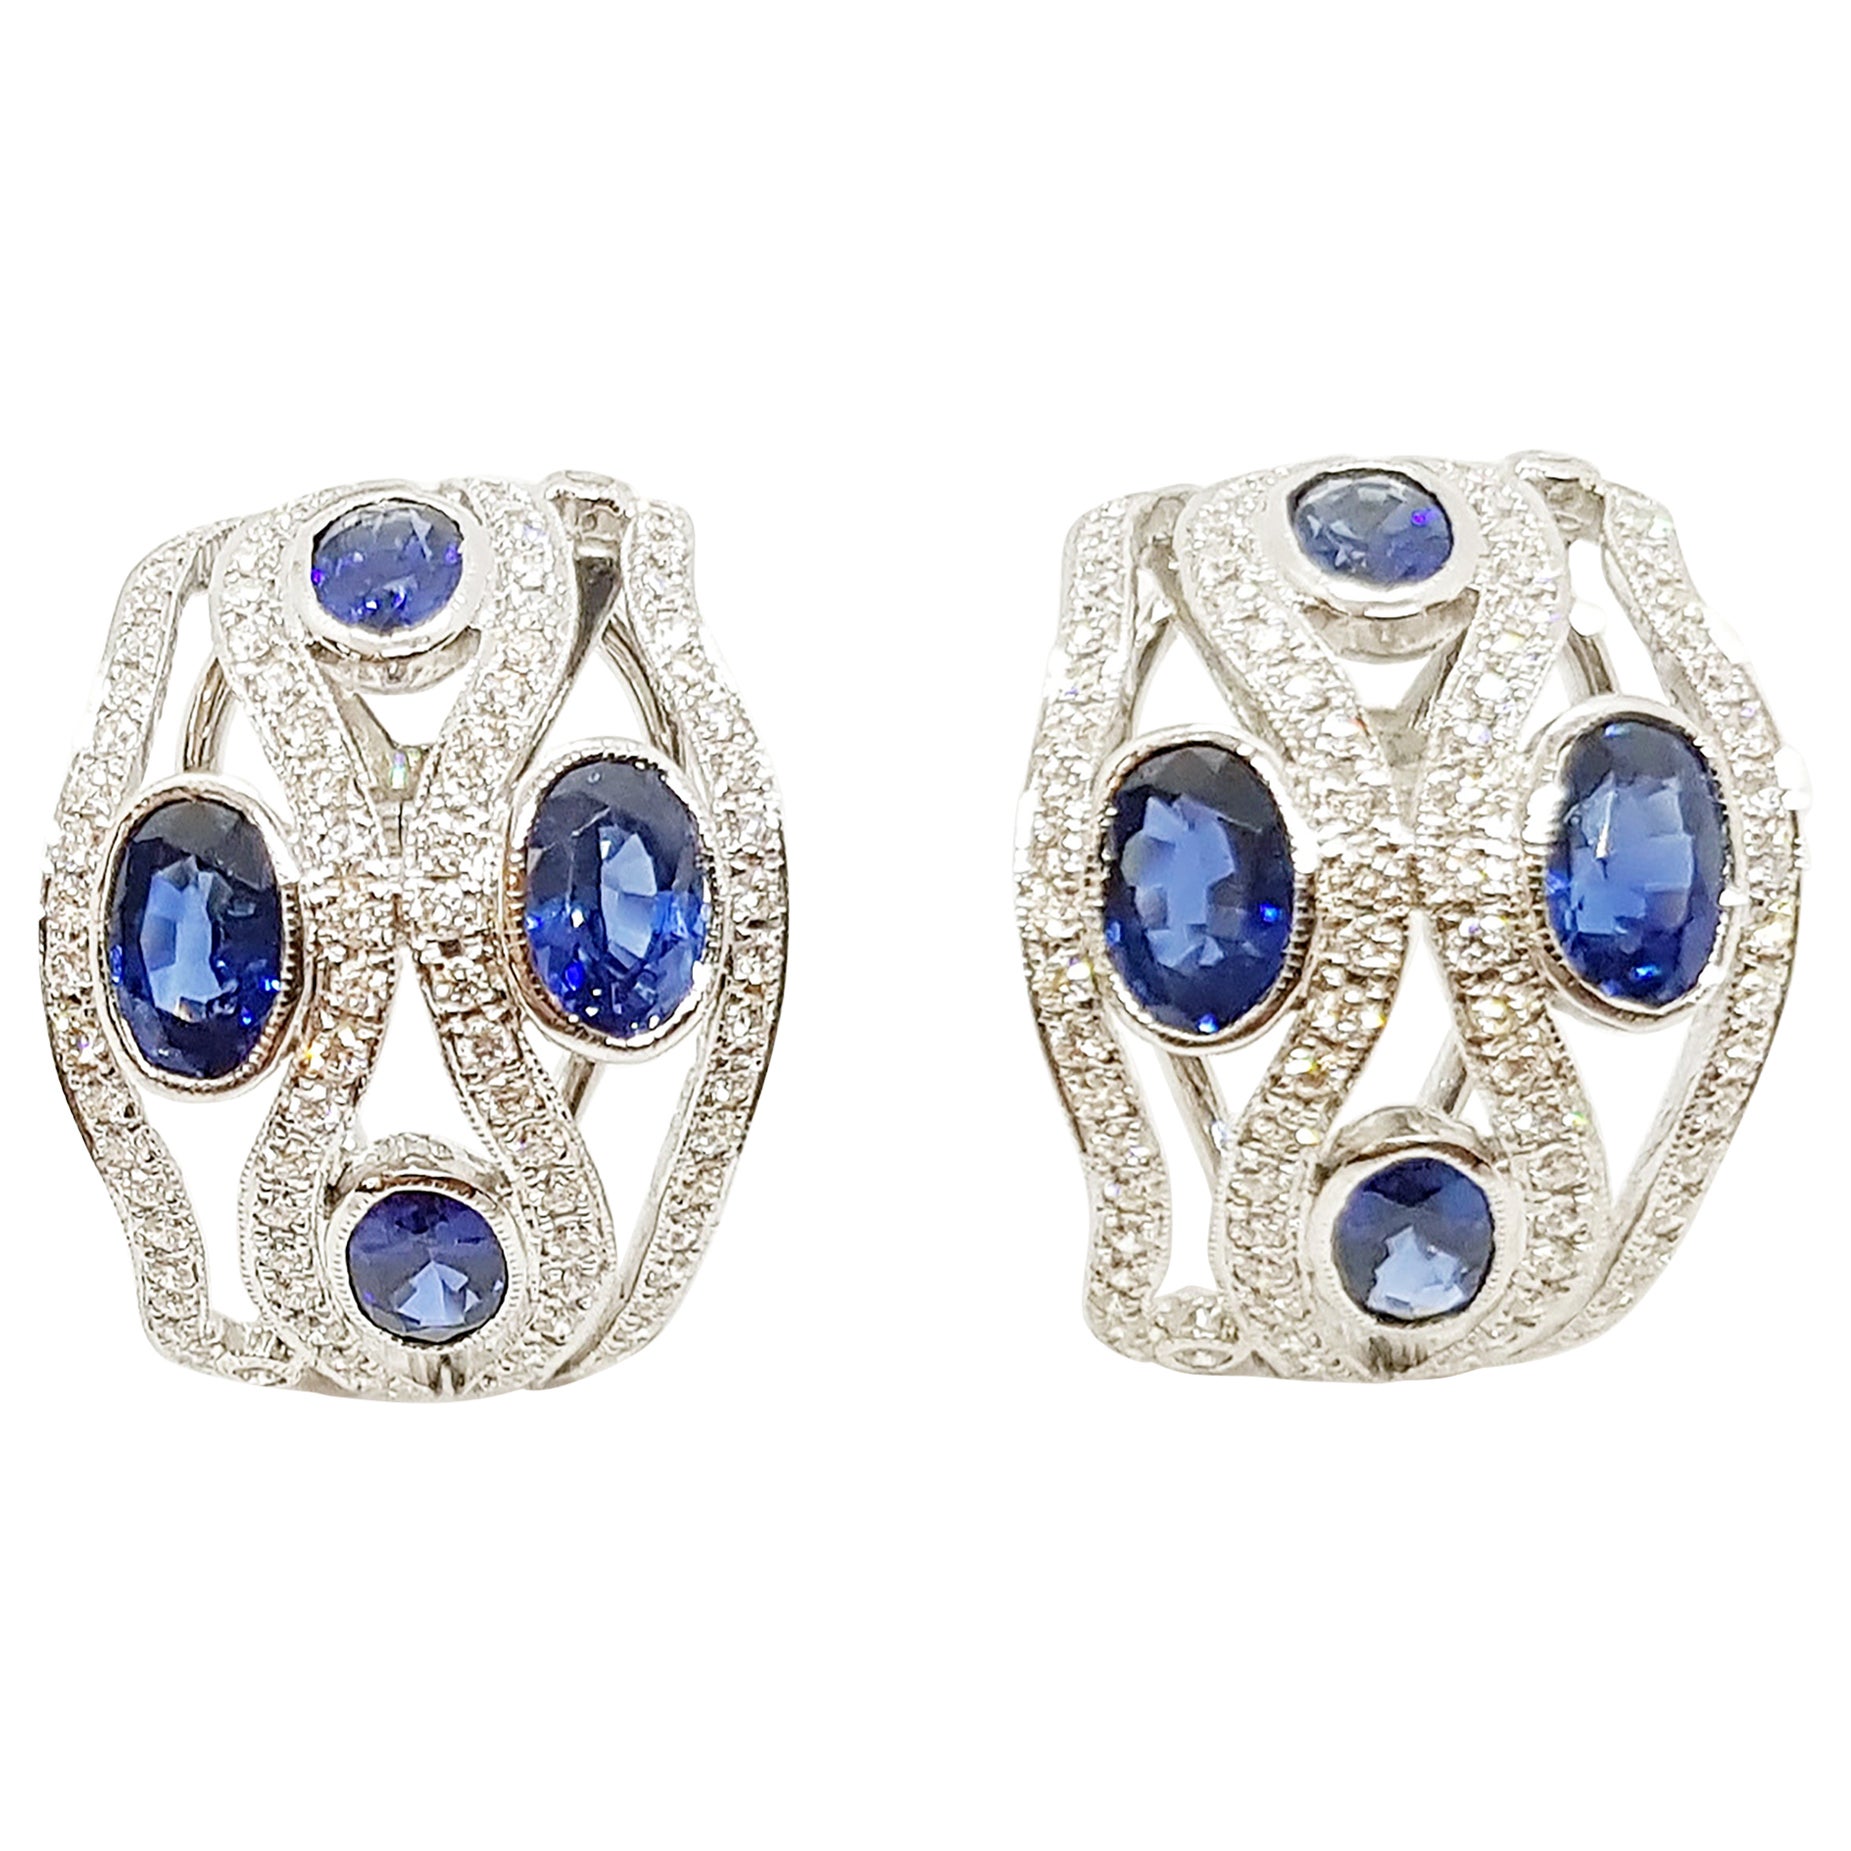 Blue Sapphire with Diamond Earrings Set in 18 Karat White Gold Settings